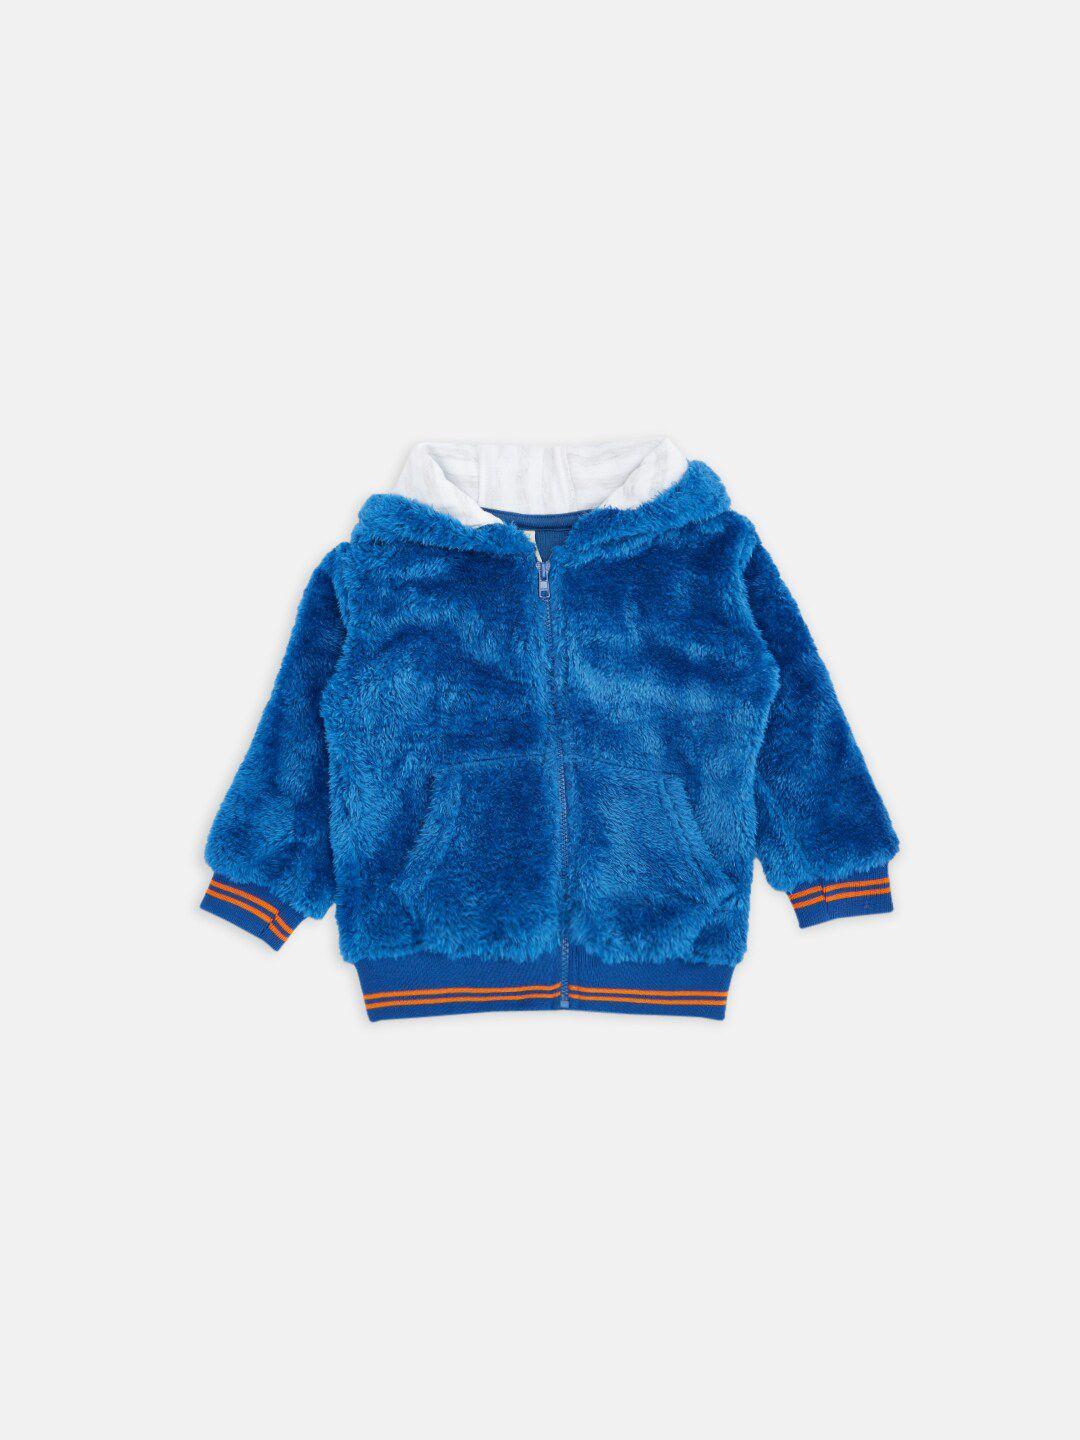 pantaloons-baby-boys-navy-blue-sweatshirt